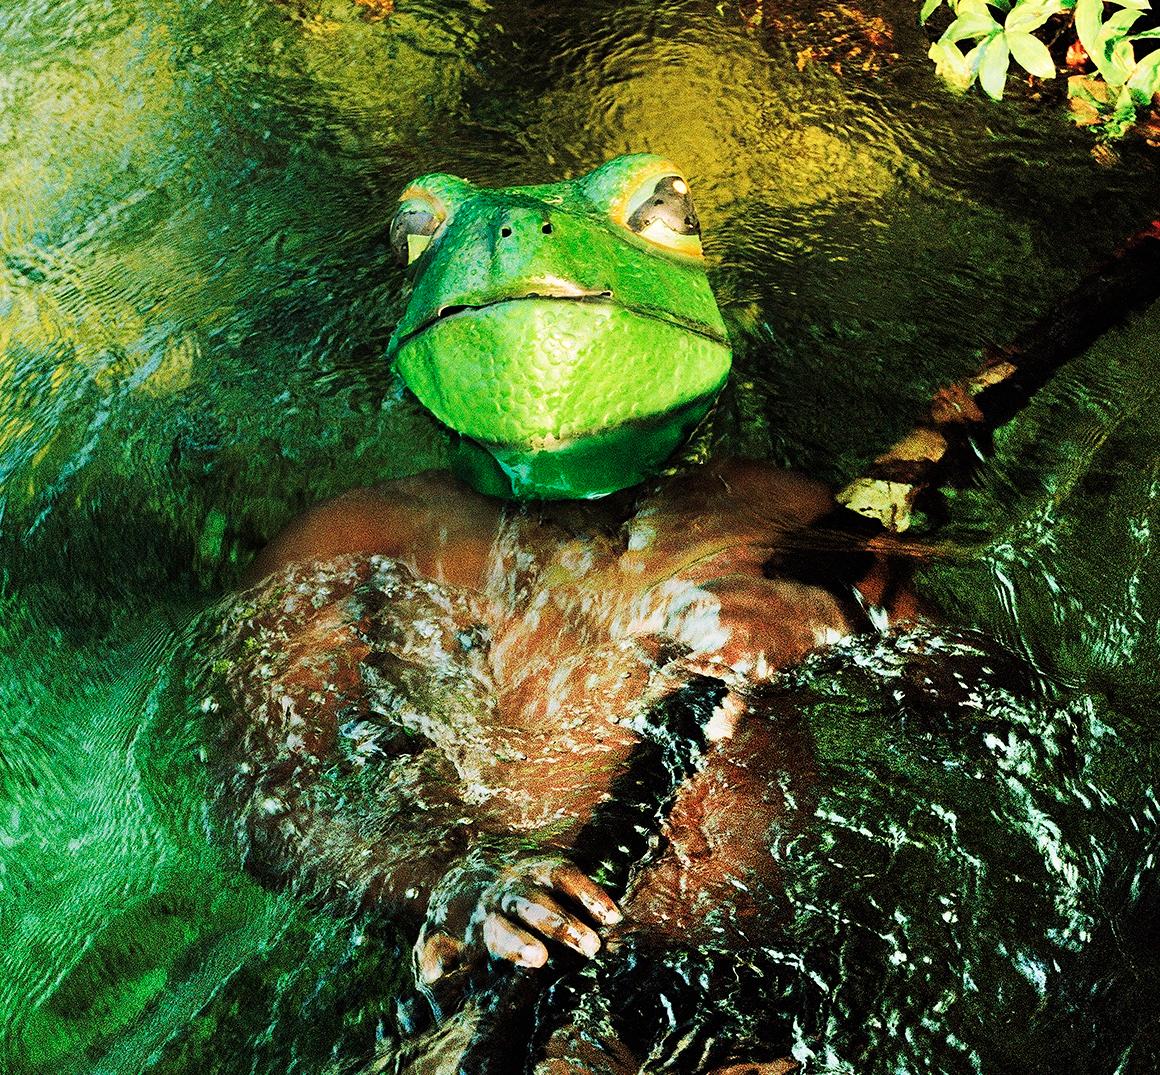 Congo Frog - 21st Century Landscape Portrait Animal Photography Edition - Black Portrait Photograph by Verena Prenner